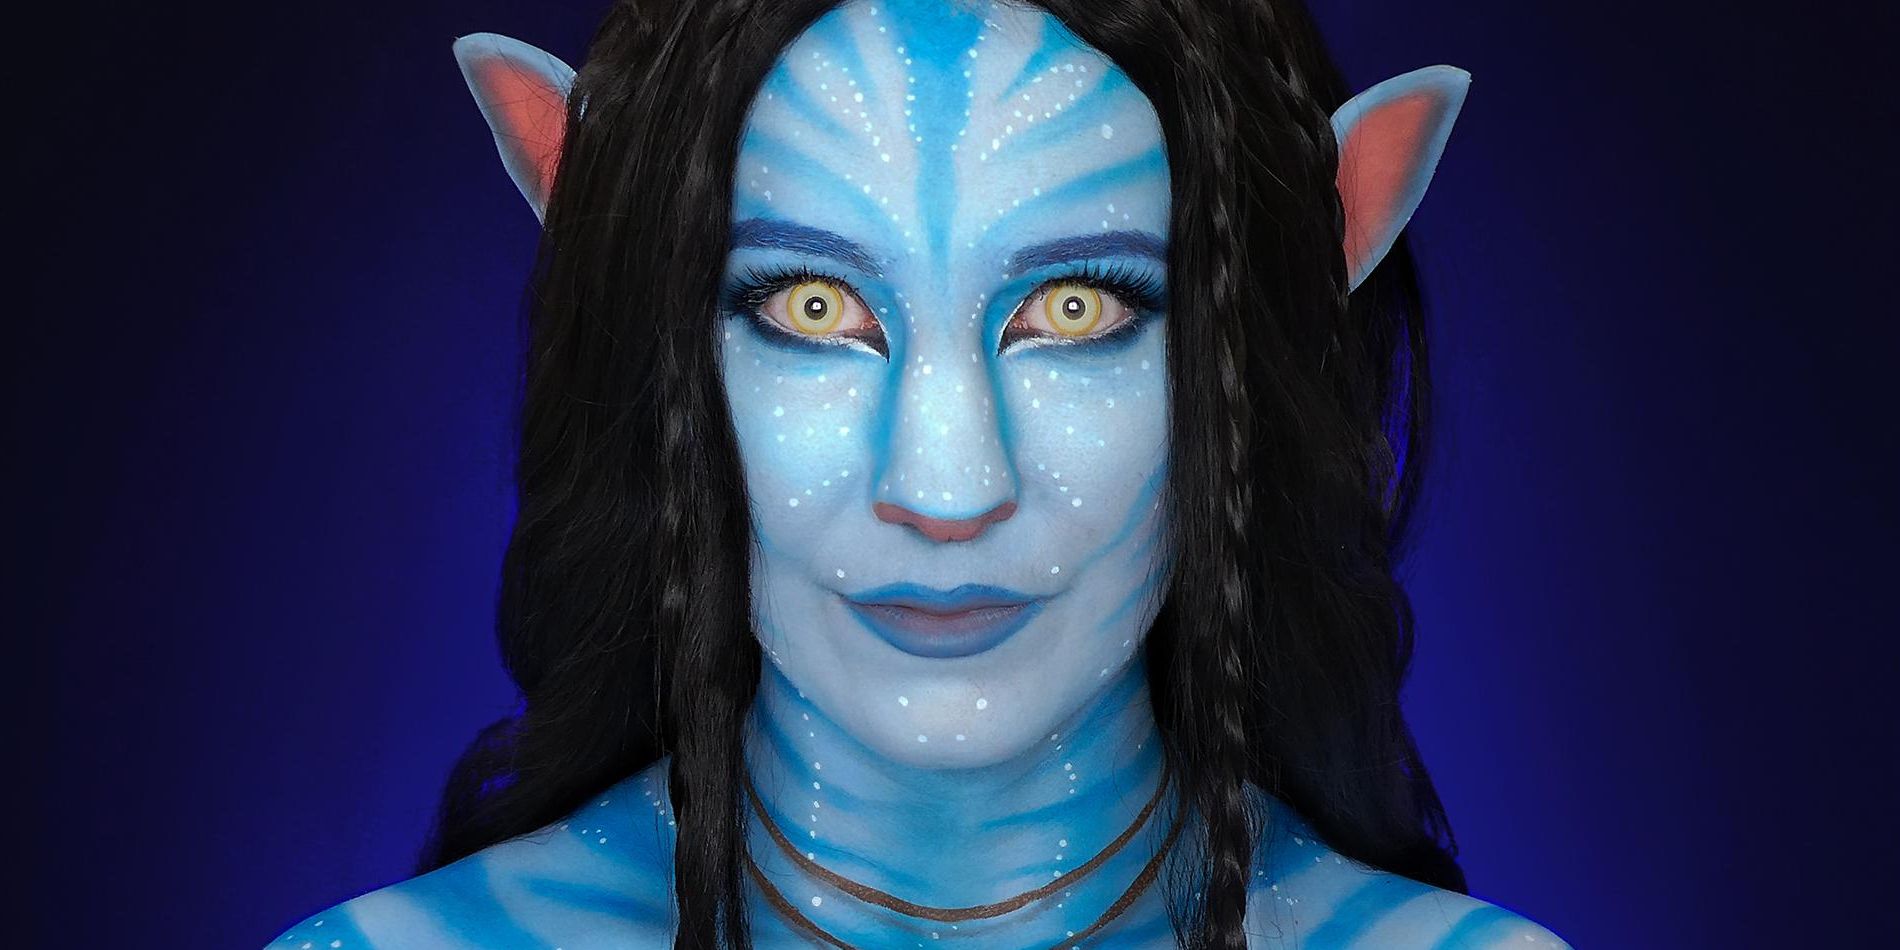 Avatar Na'vi Body Paint Cosplay Looks As Good As The Movie's CGI